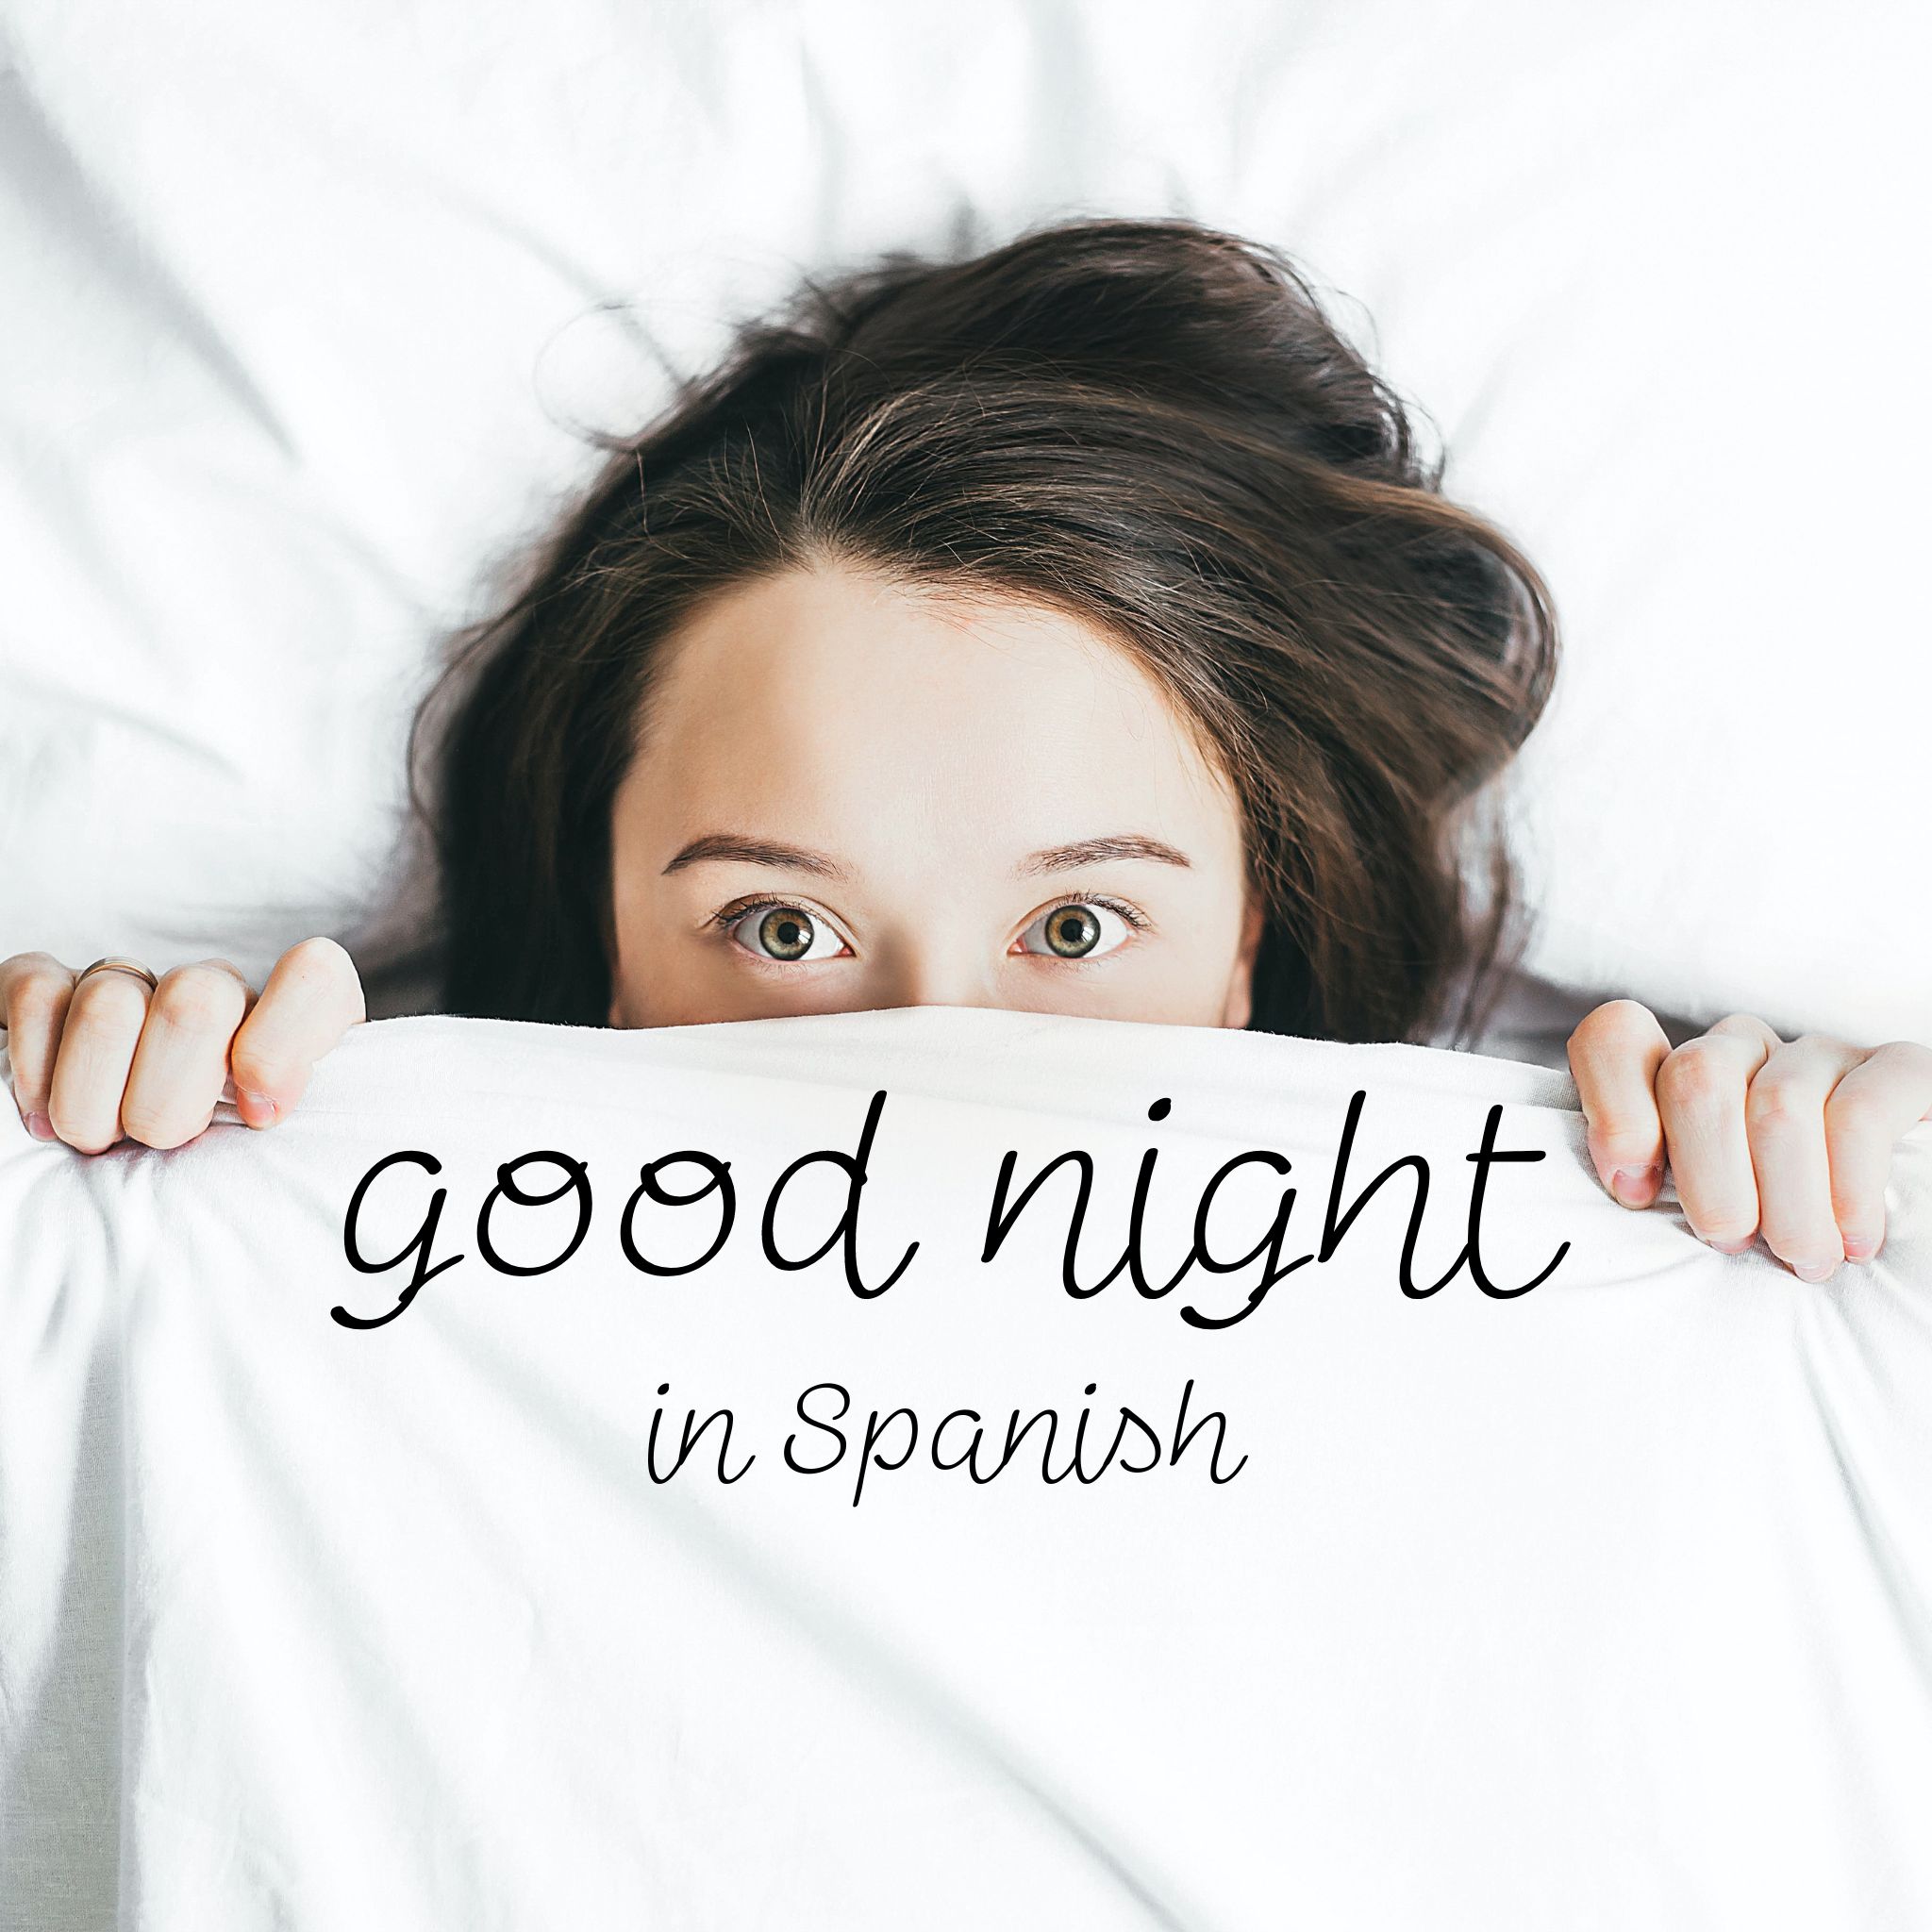 i do homework at night in spanish